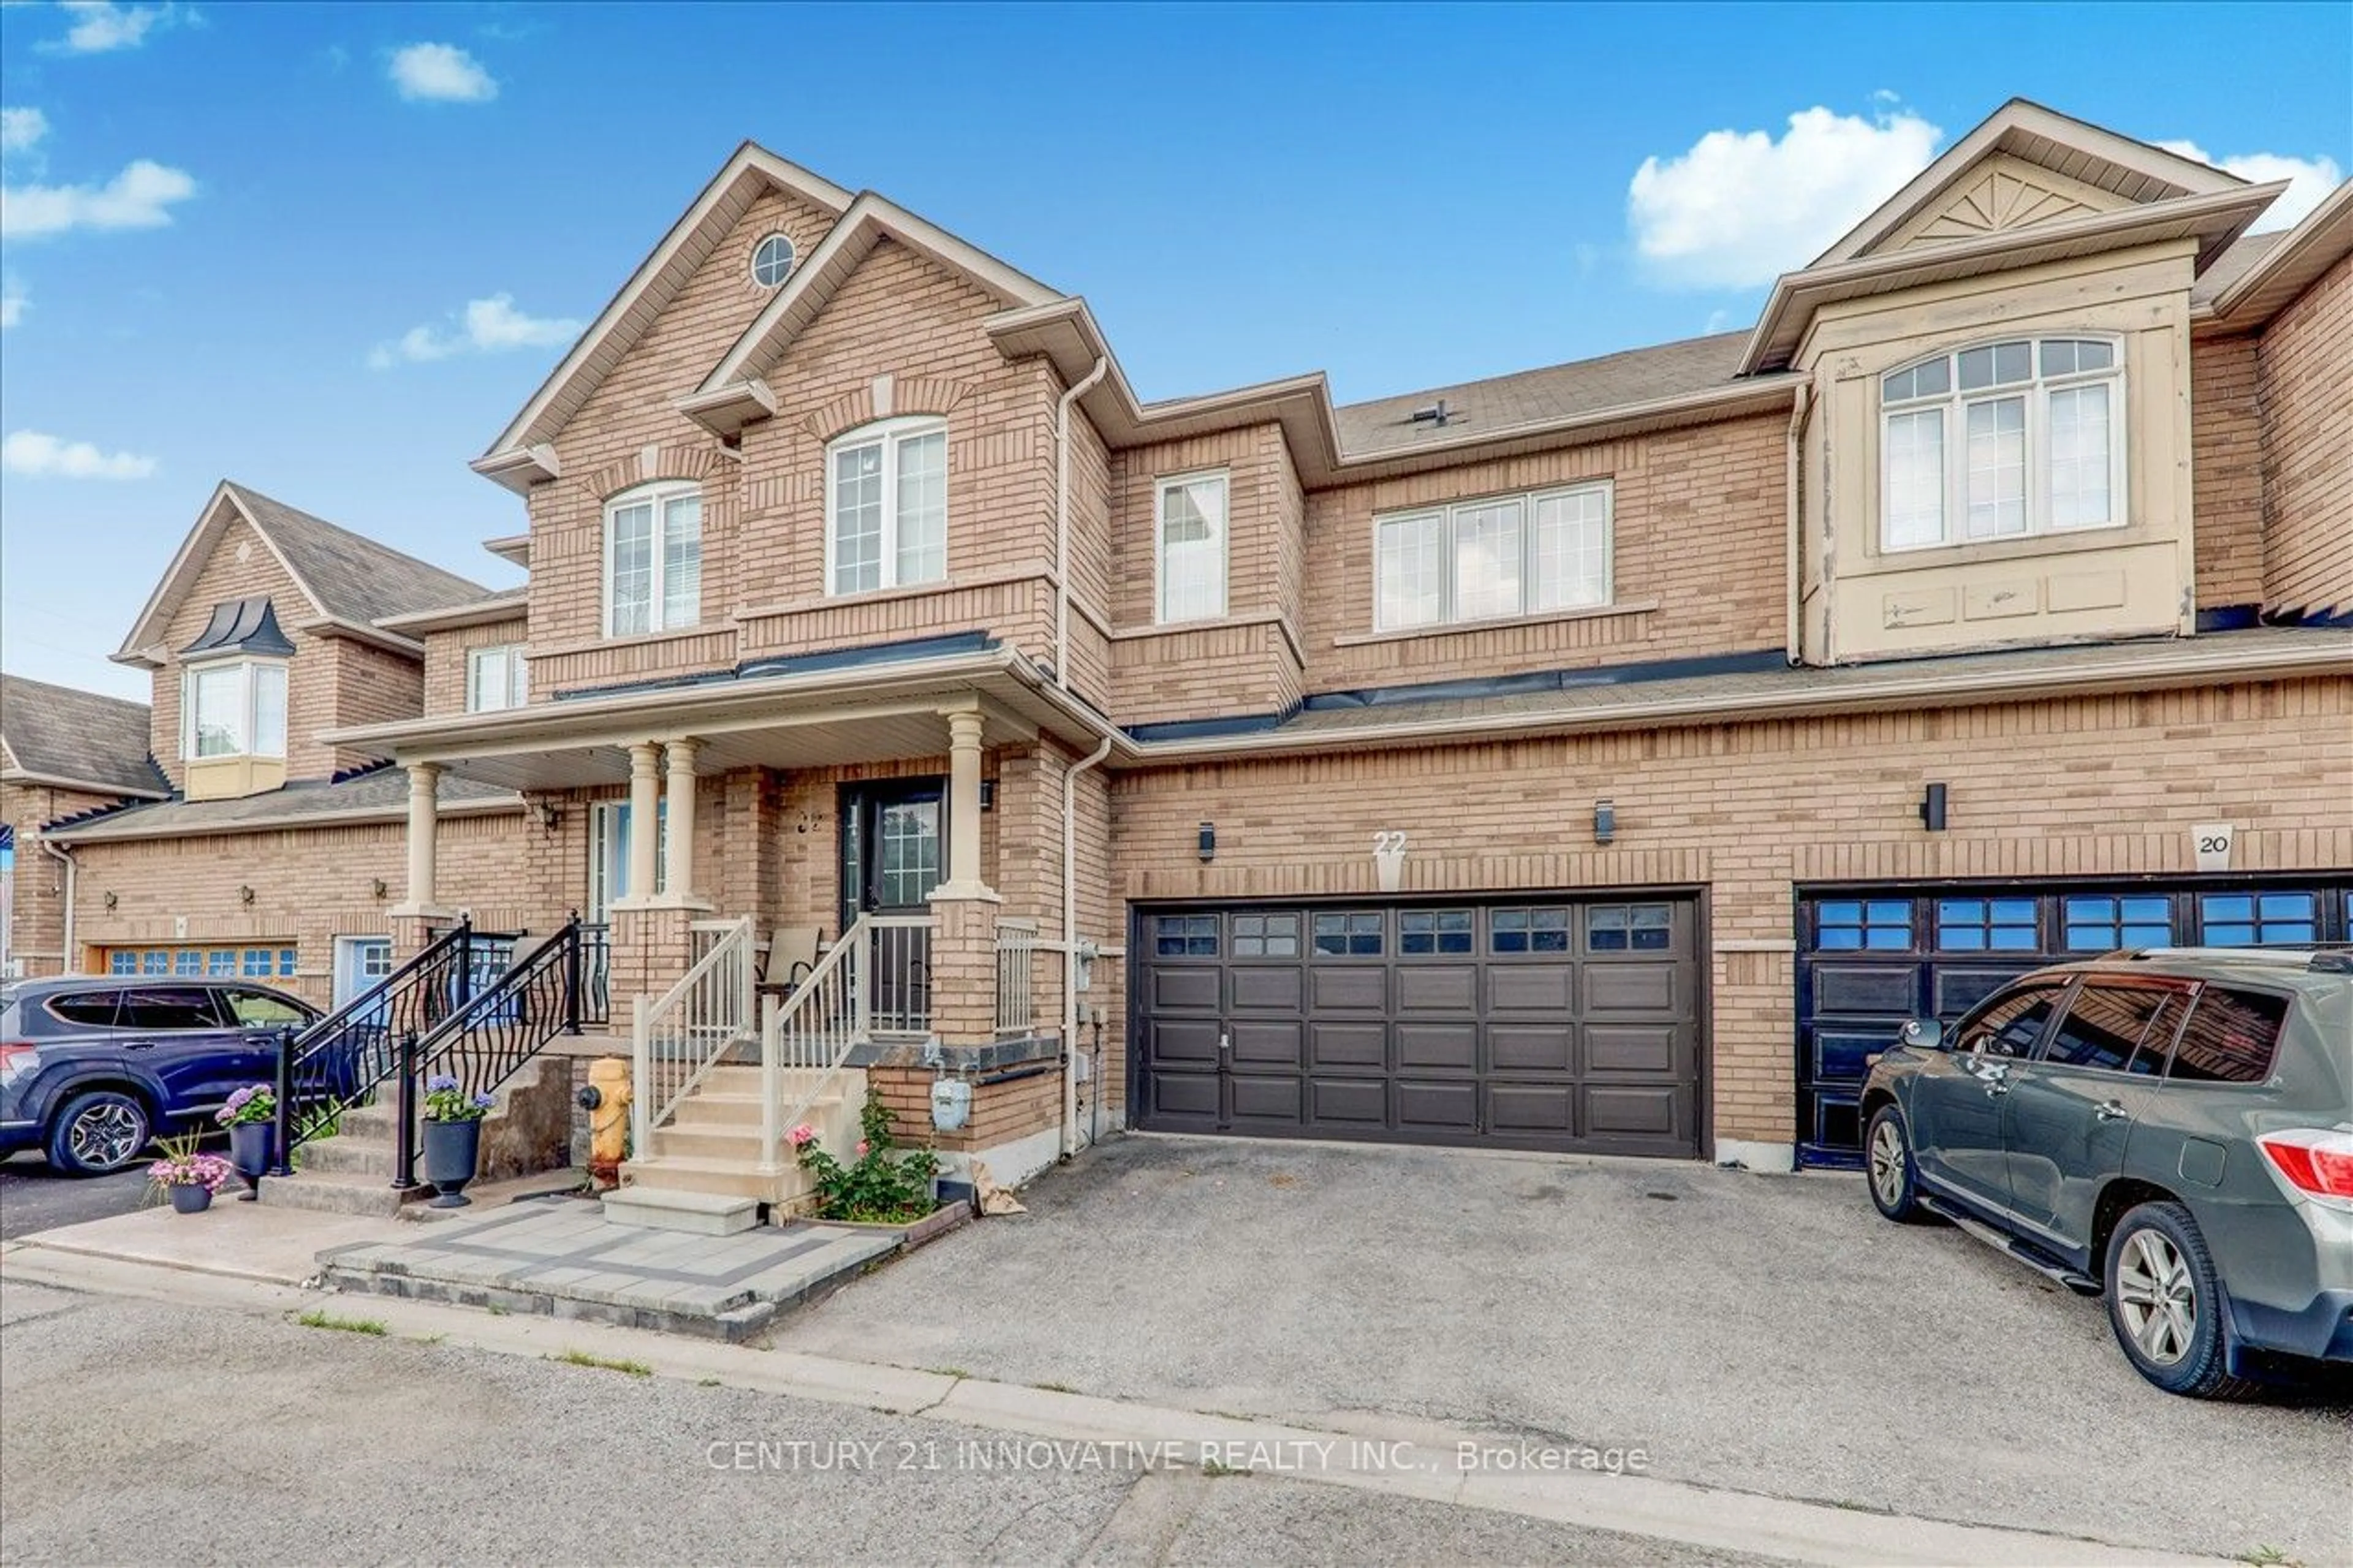 Home with brick exterior material for 22 Culver Lane, Toronto Ontario M1X 2E2